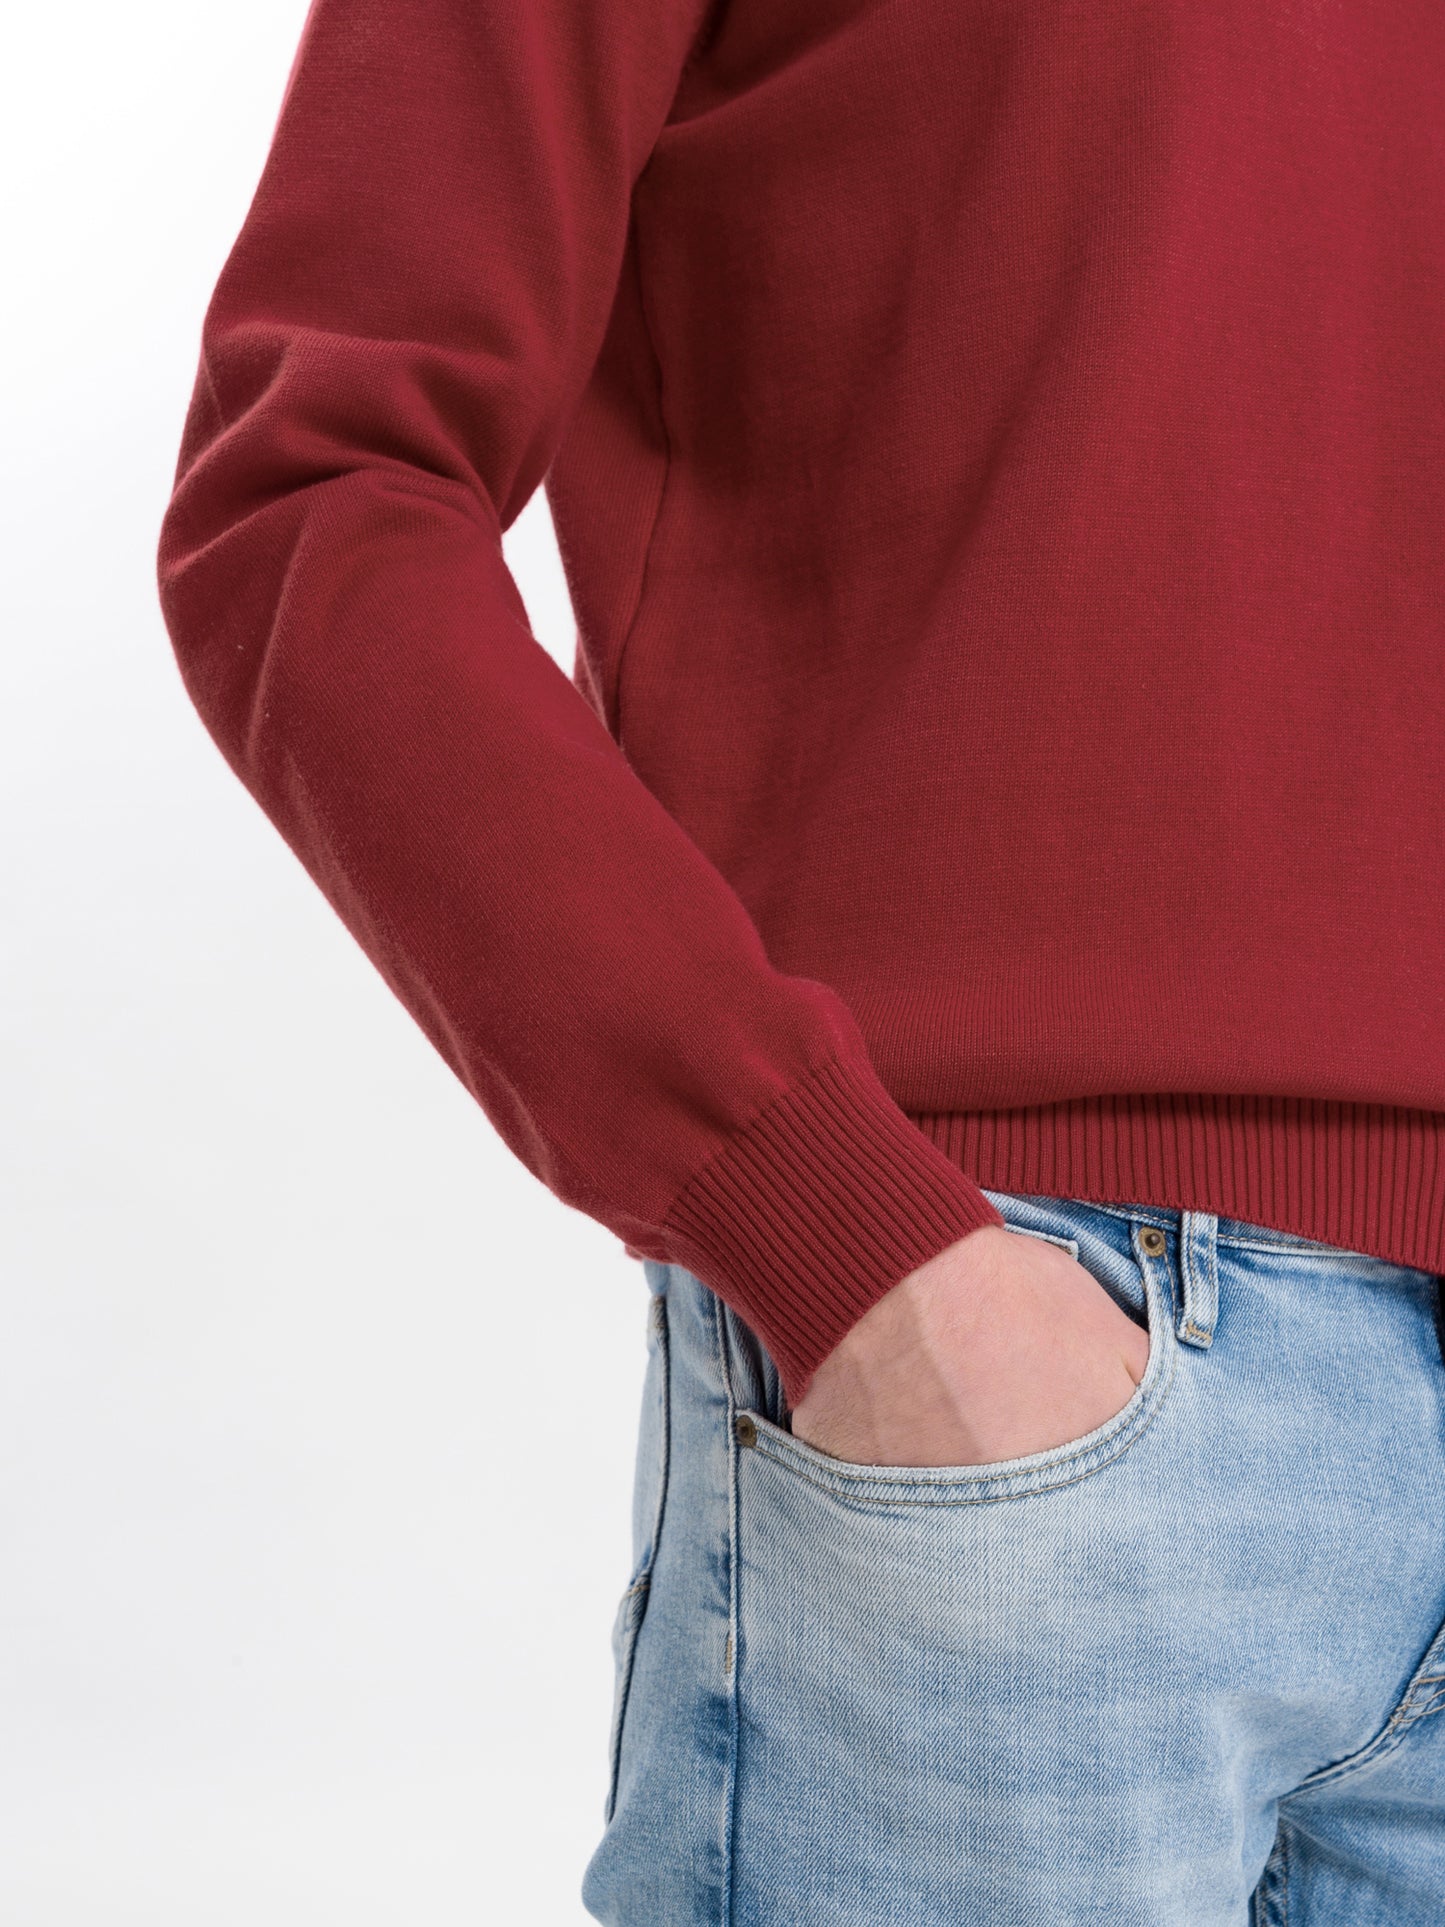 Men's regular fine knit sweater red